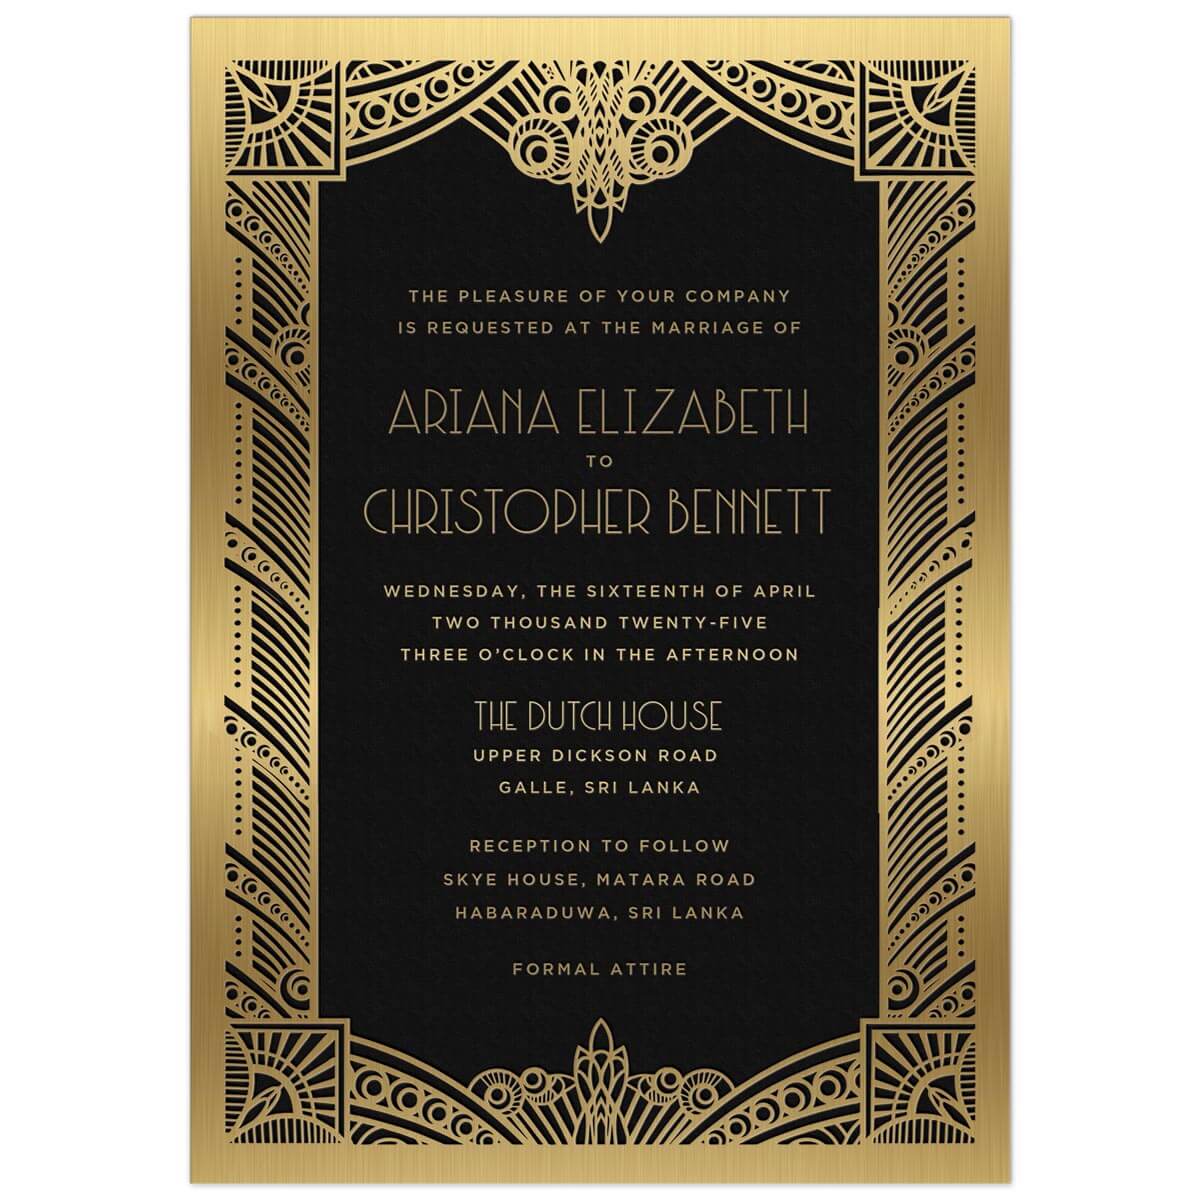 Black invitation with ornate gold deco border design. Block and deco font centered on the invitation in gold foil.